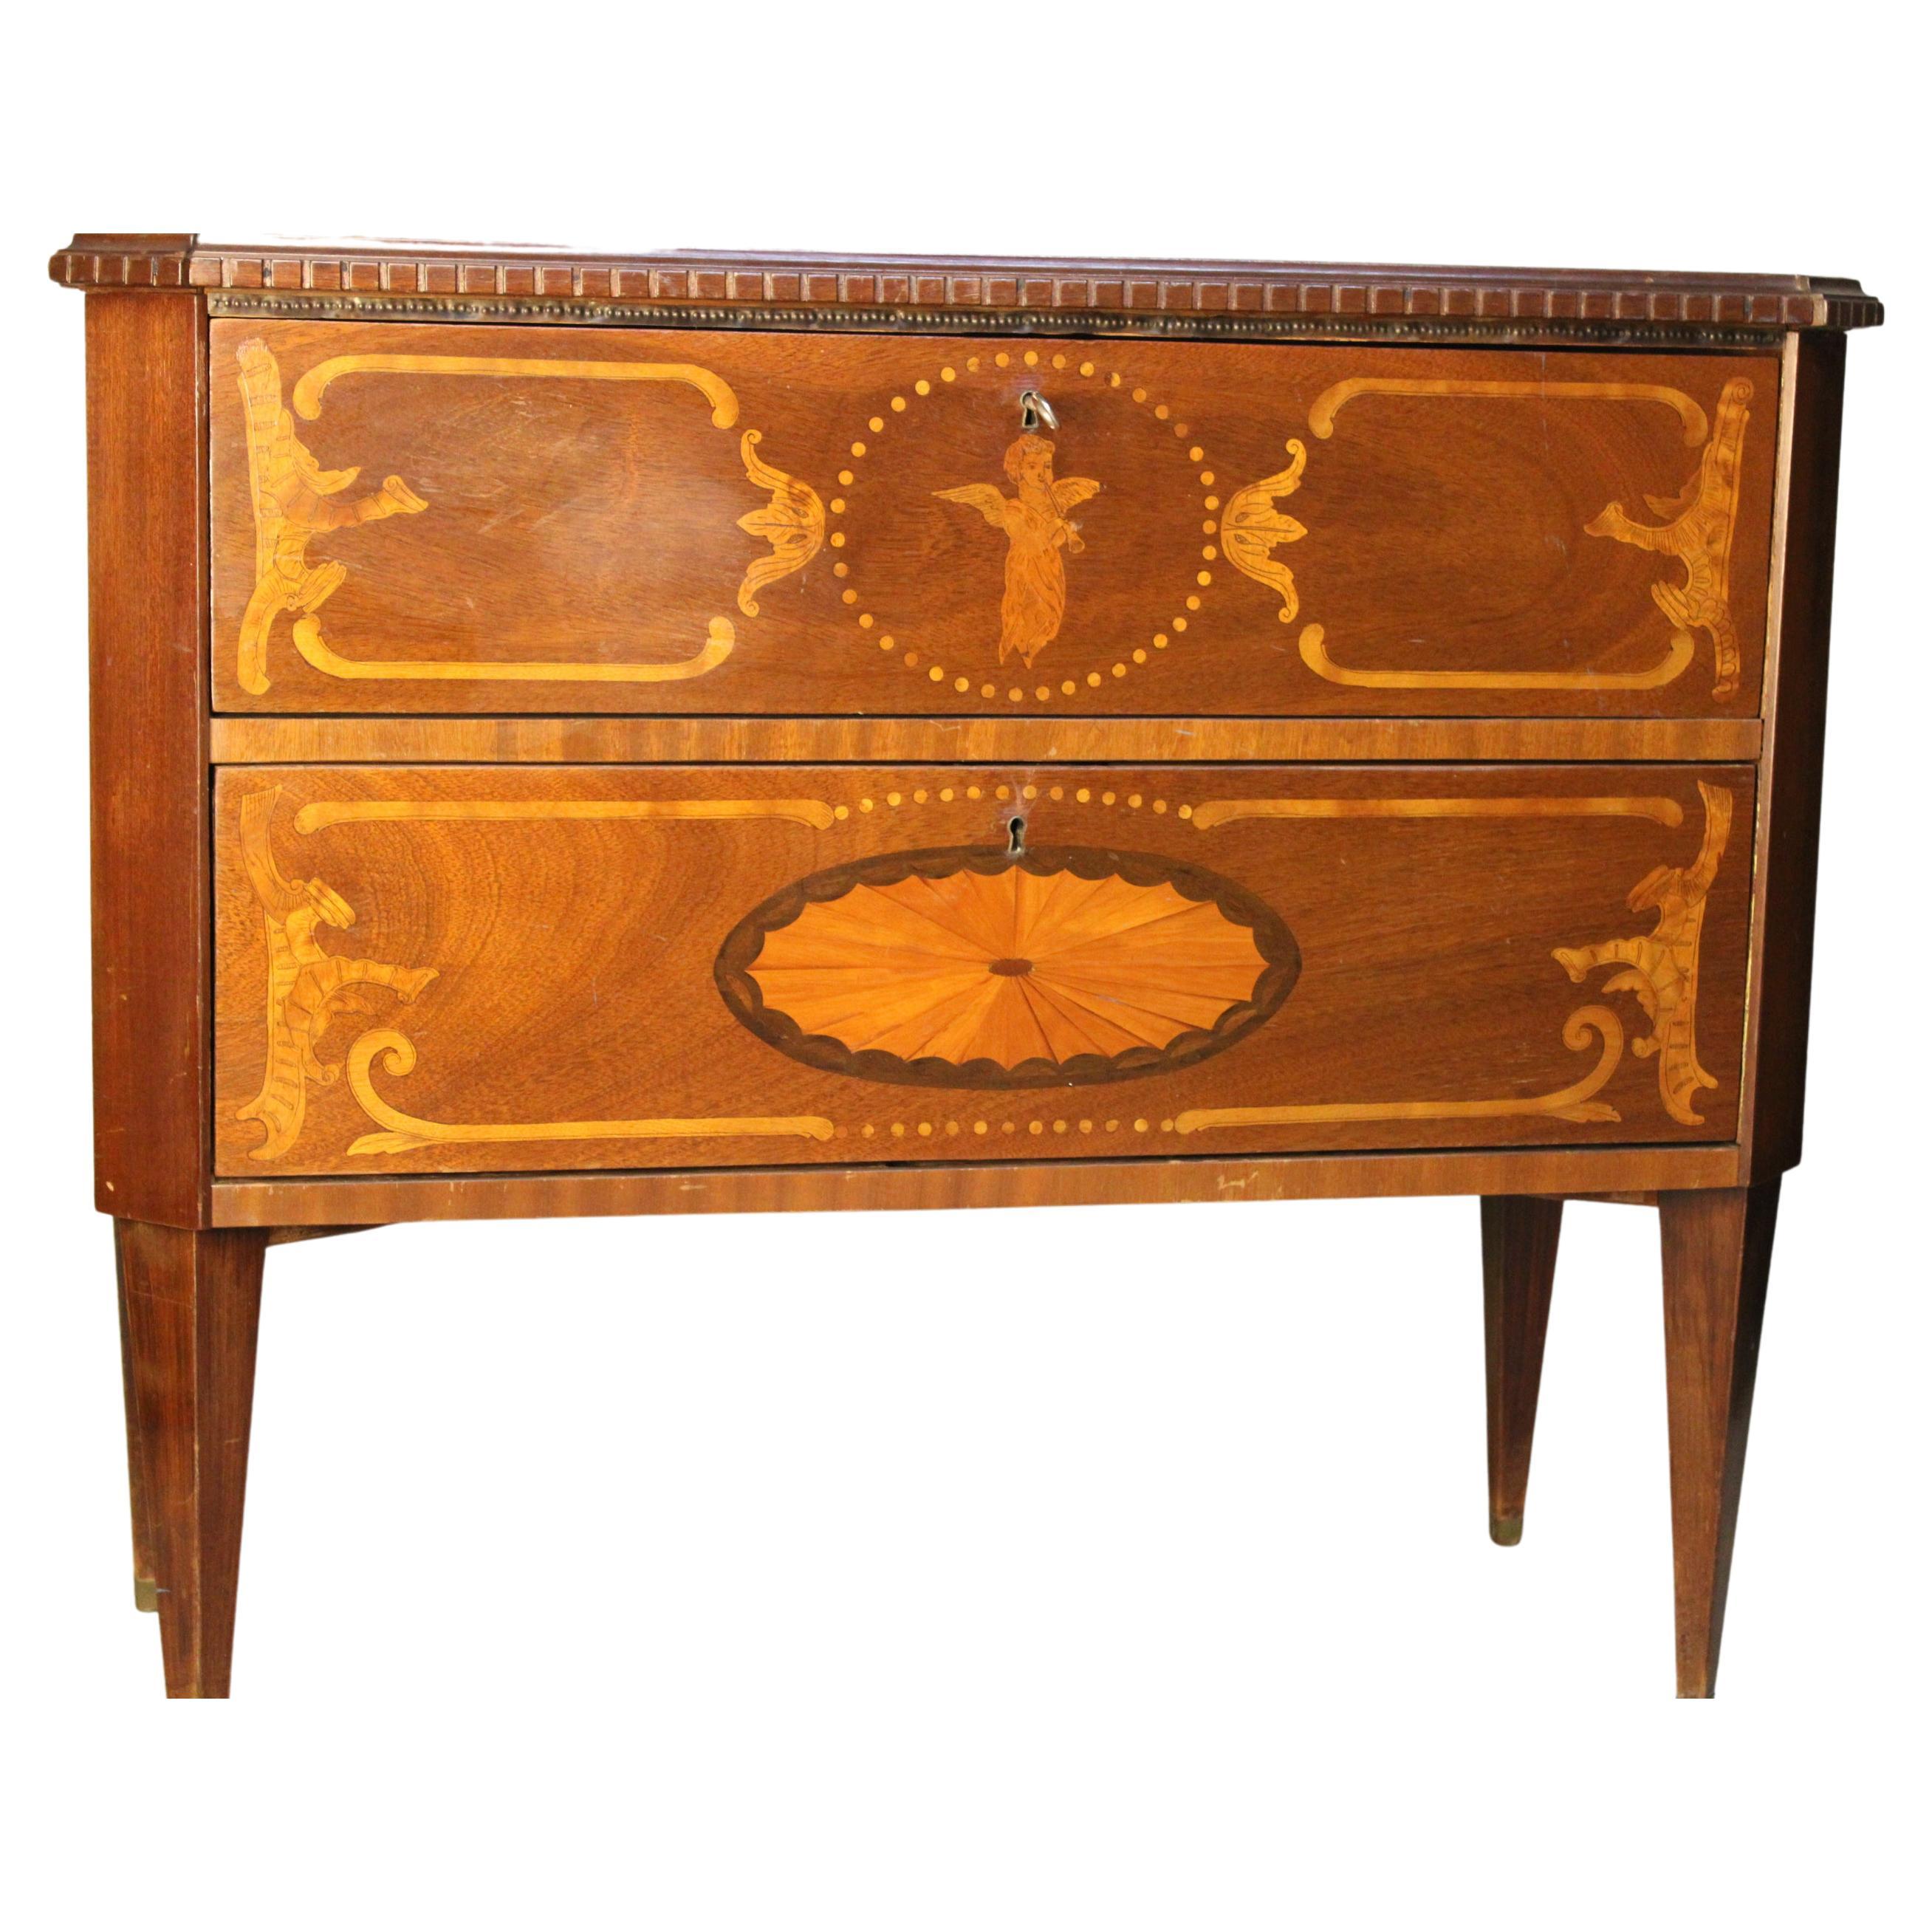 19th century Marquetry Dresser, Rosewood circa 1870 England, inlaid dresser